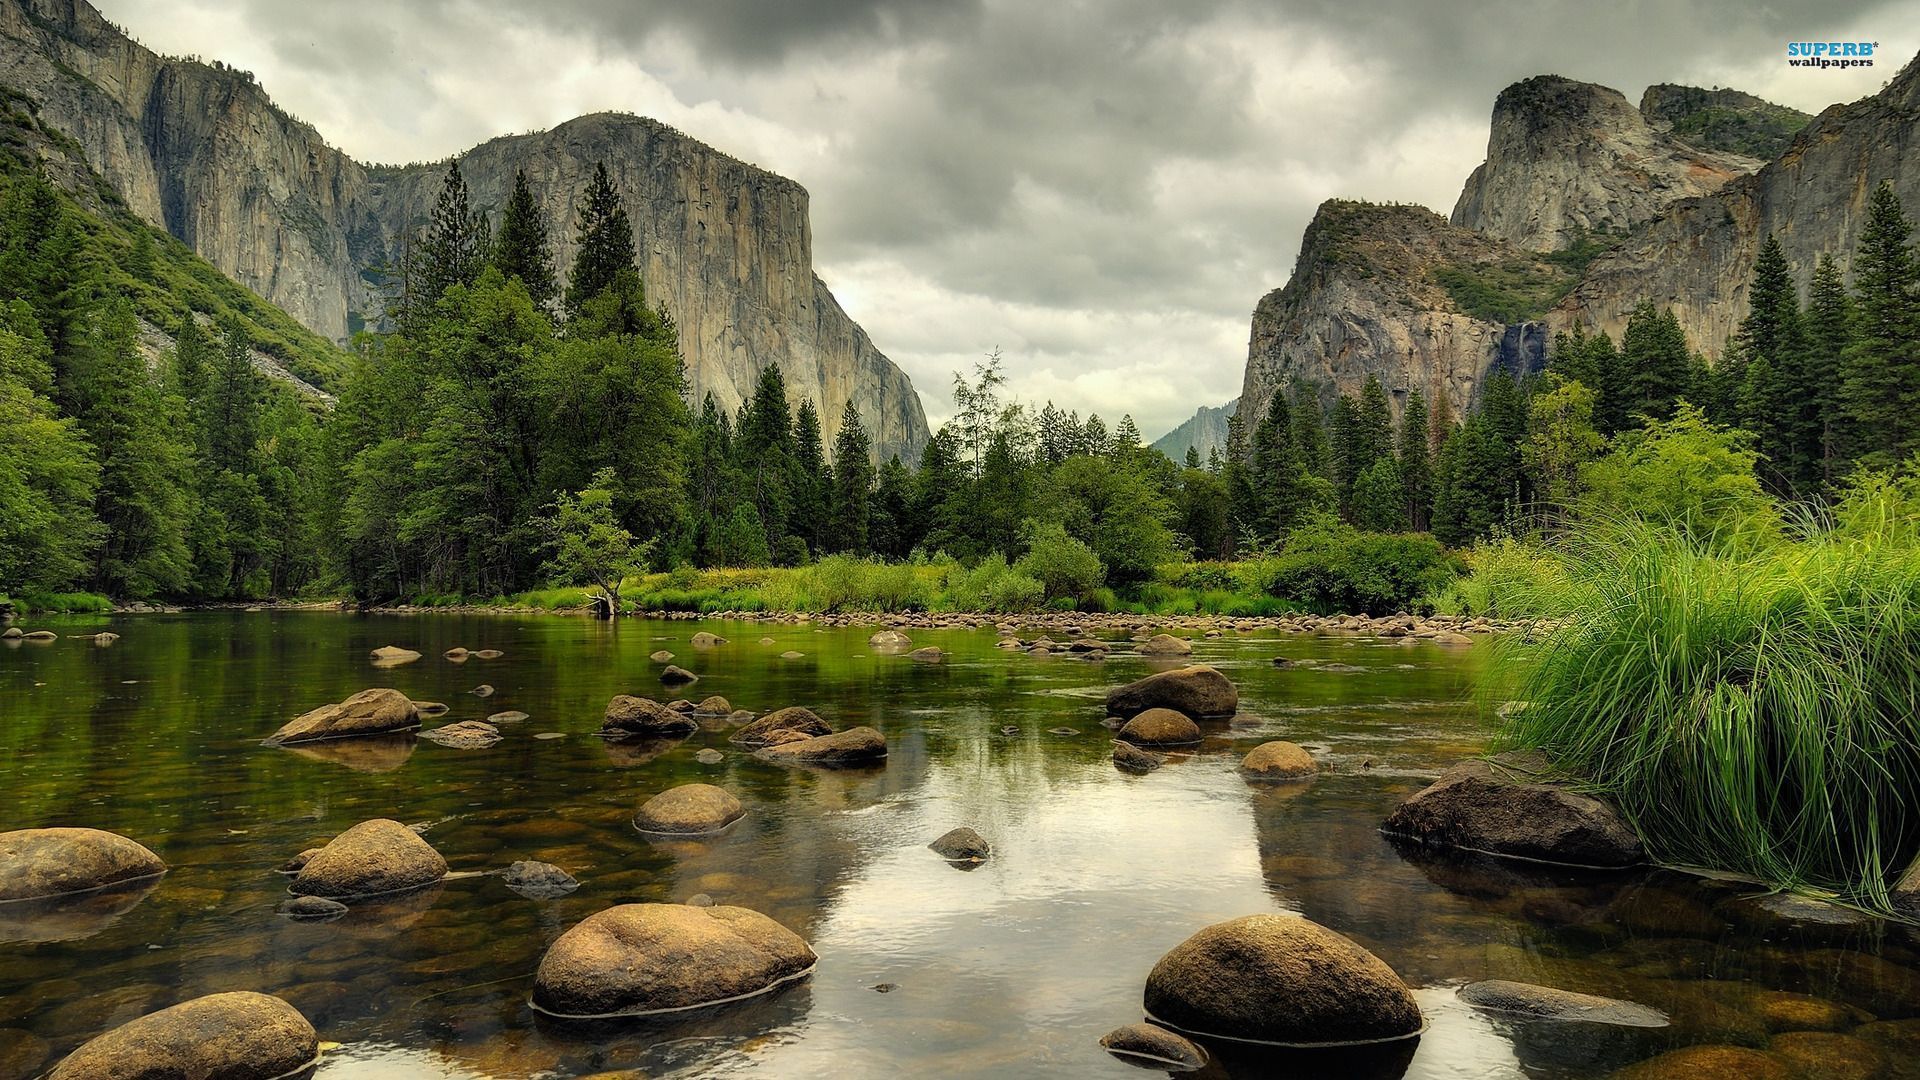 Yosemite National Park Information Facts Tiverton Foundation